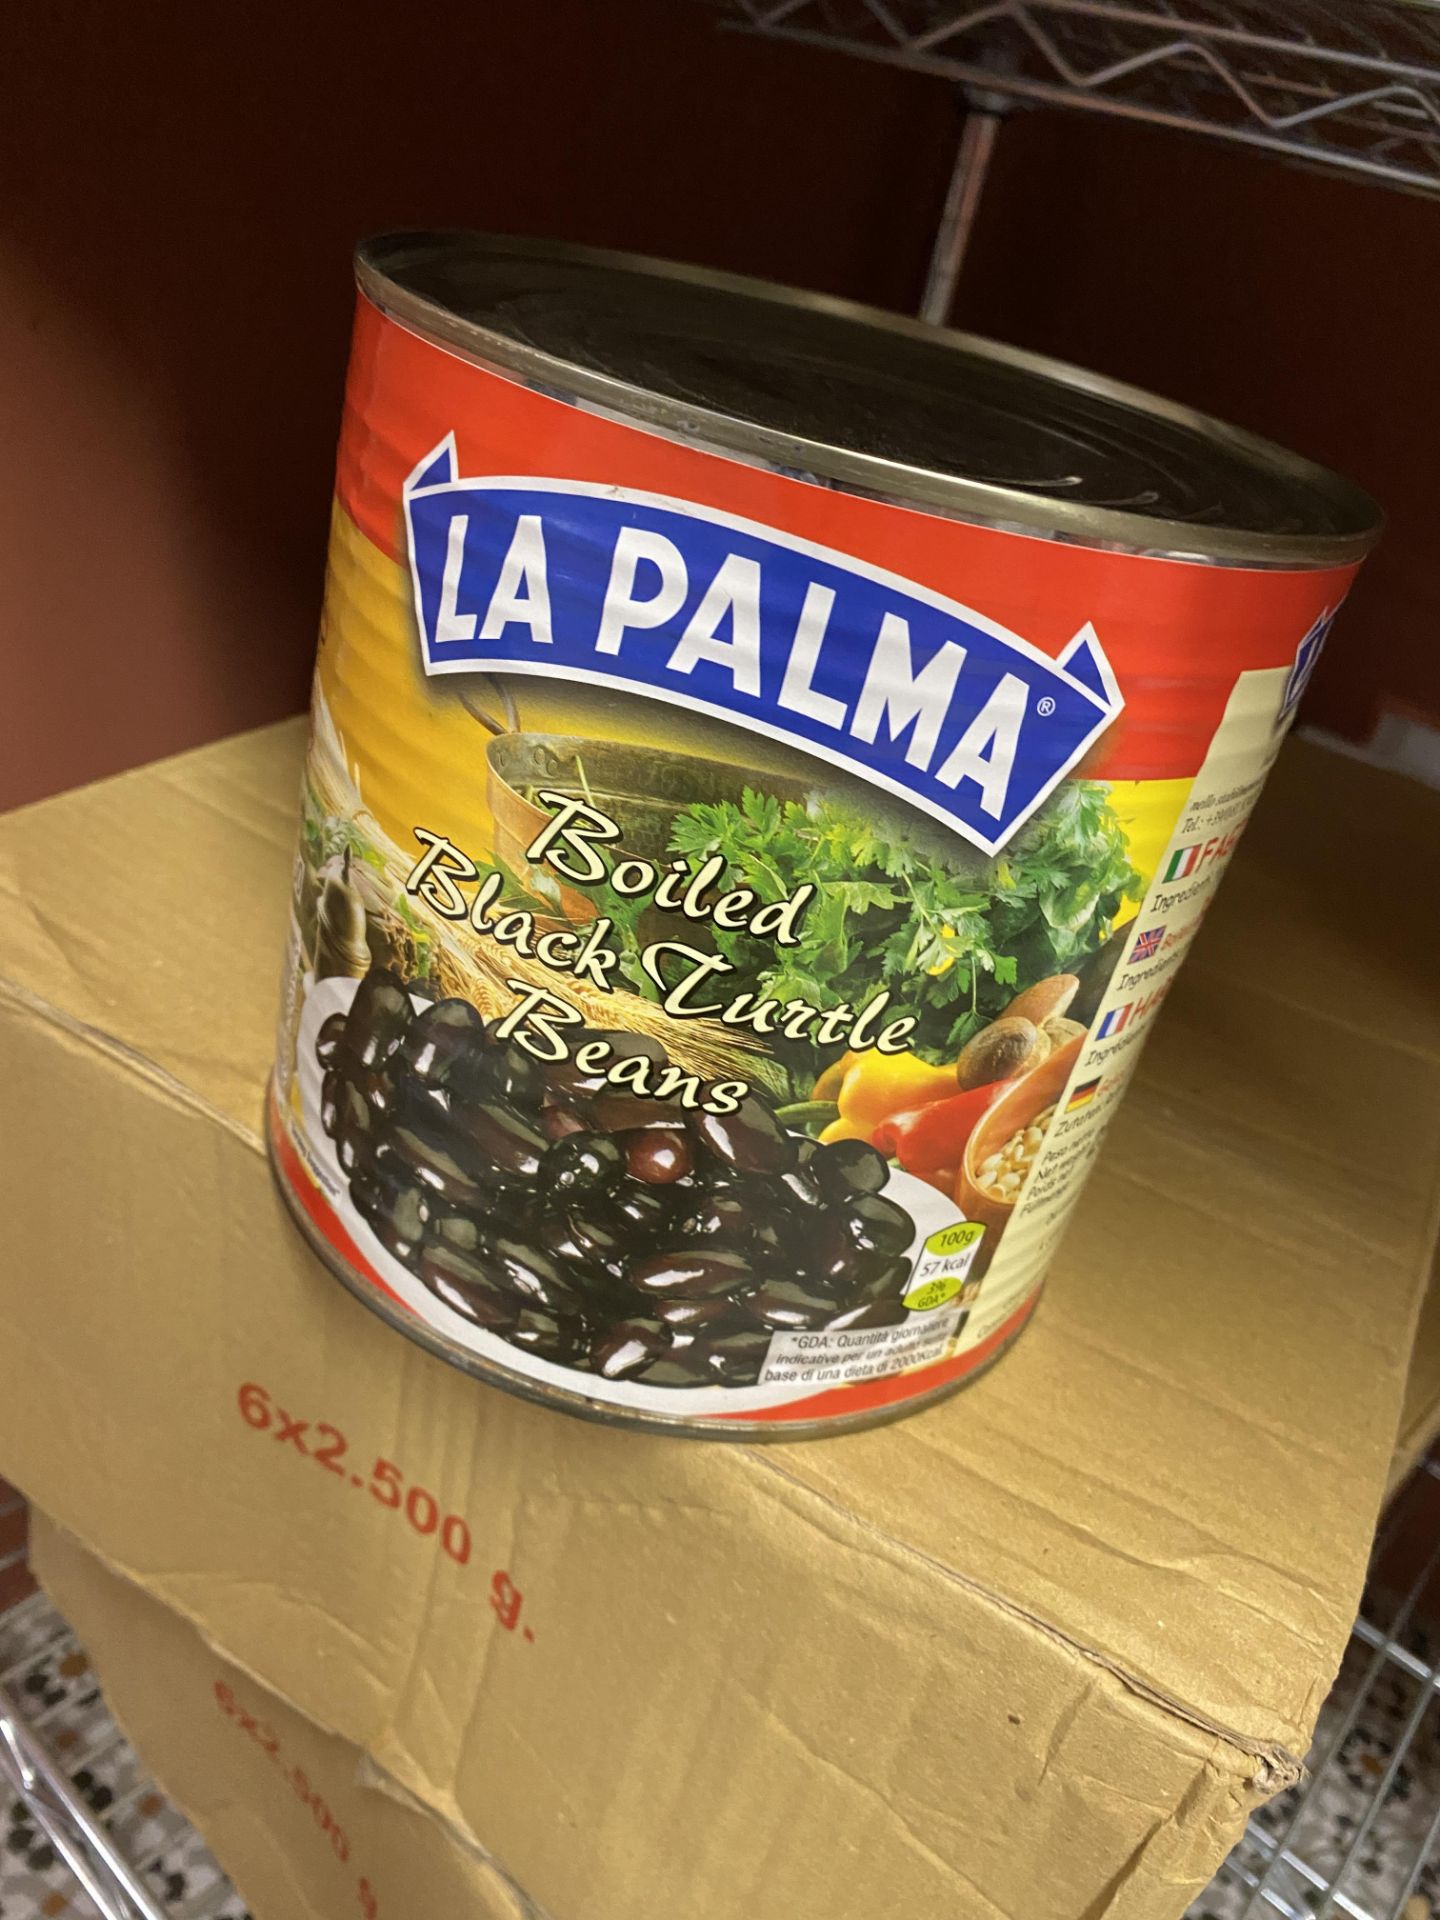 11: 2.5Kg La Parma Black Turtle Beans in Water, Best Before Date July 2022 RRP £11.99 Per Can